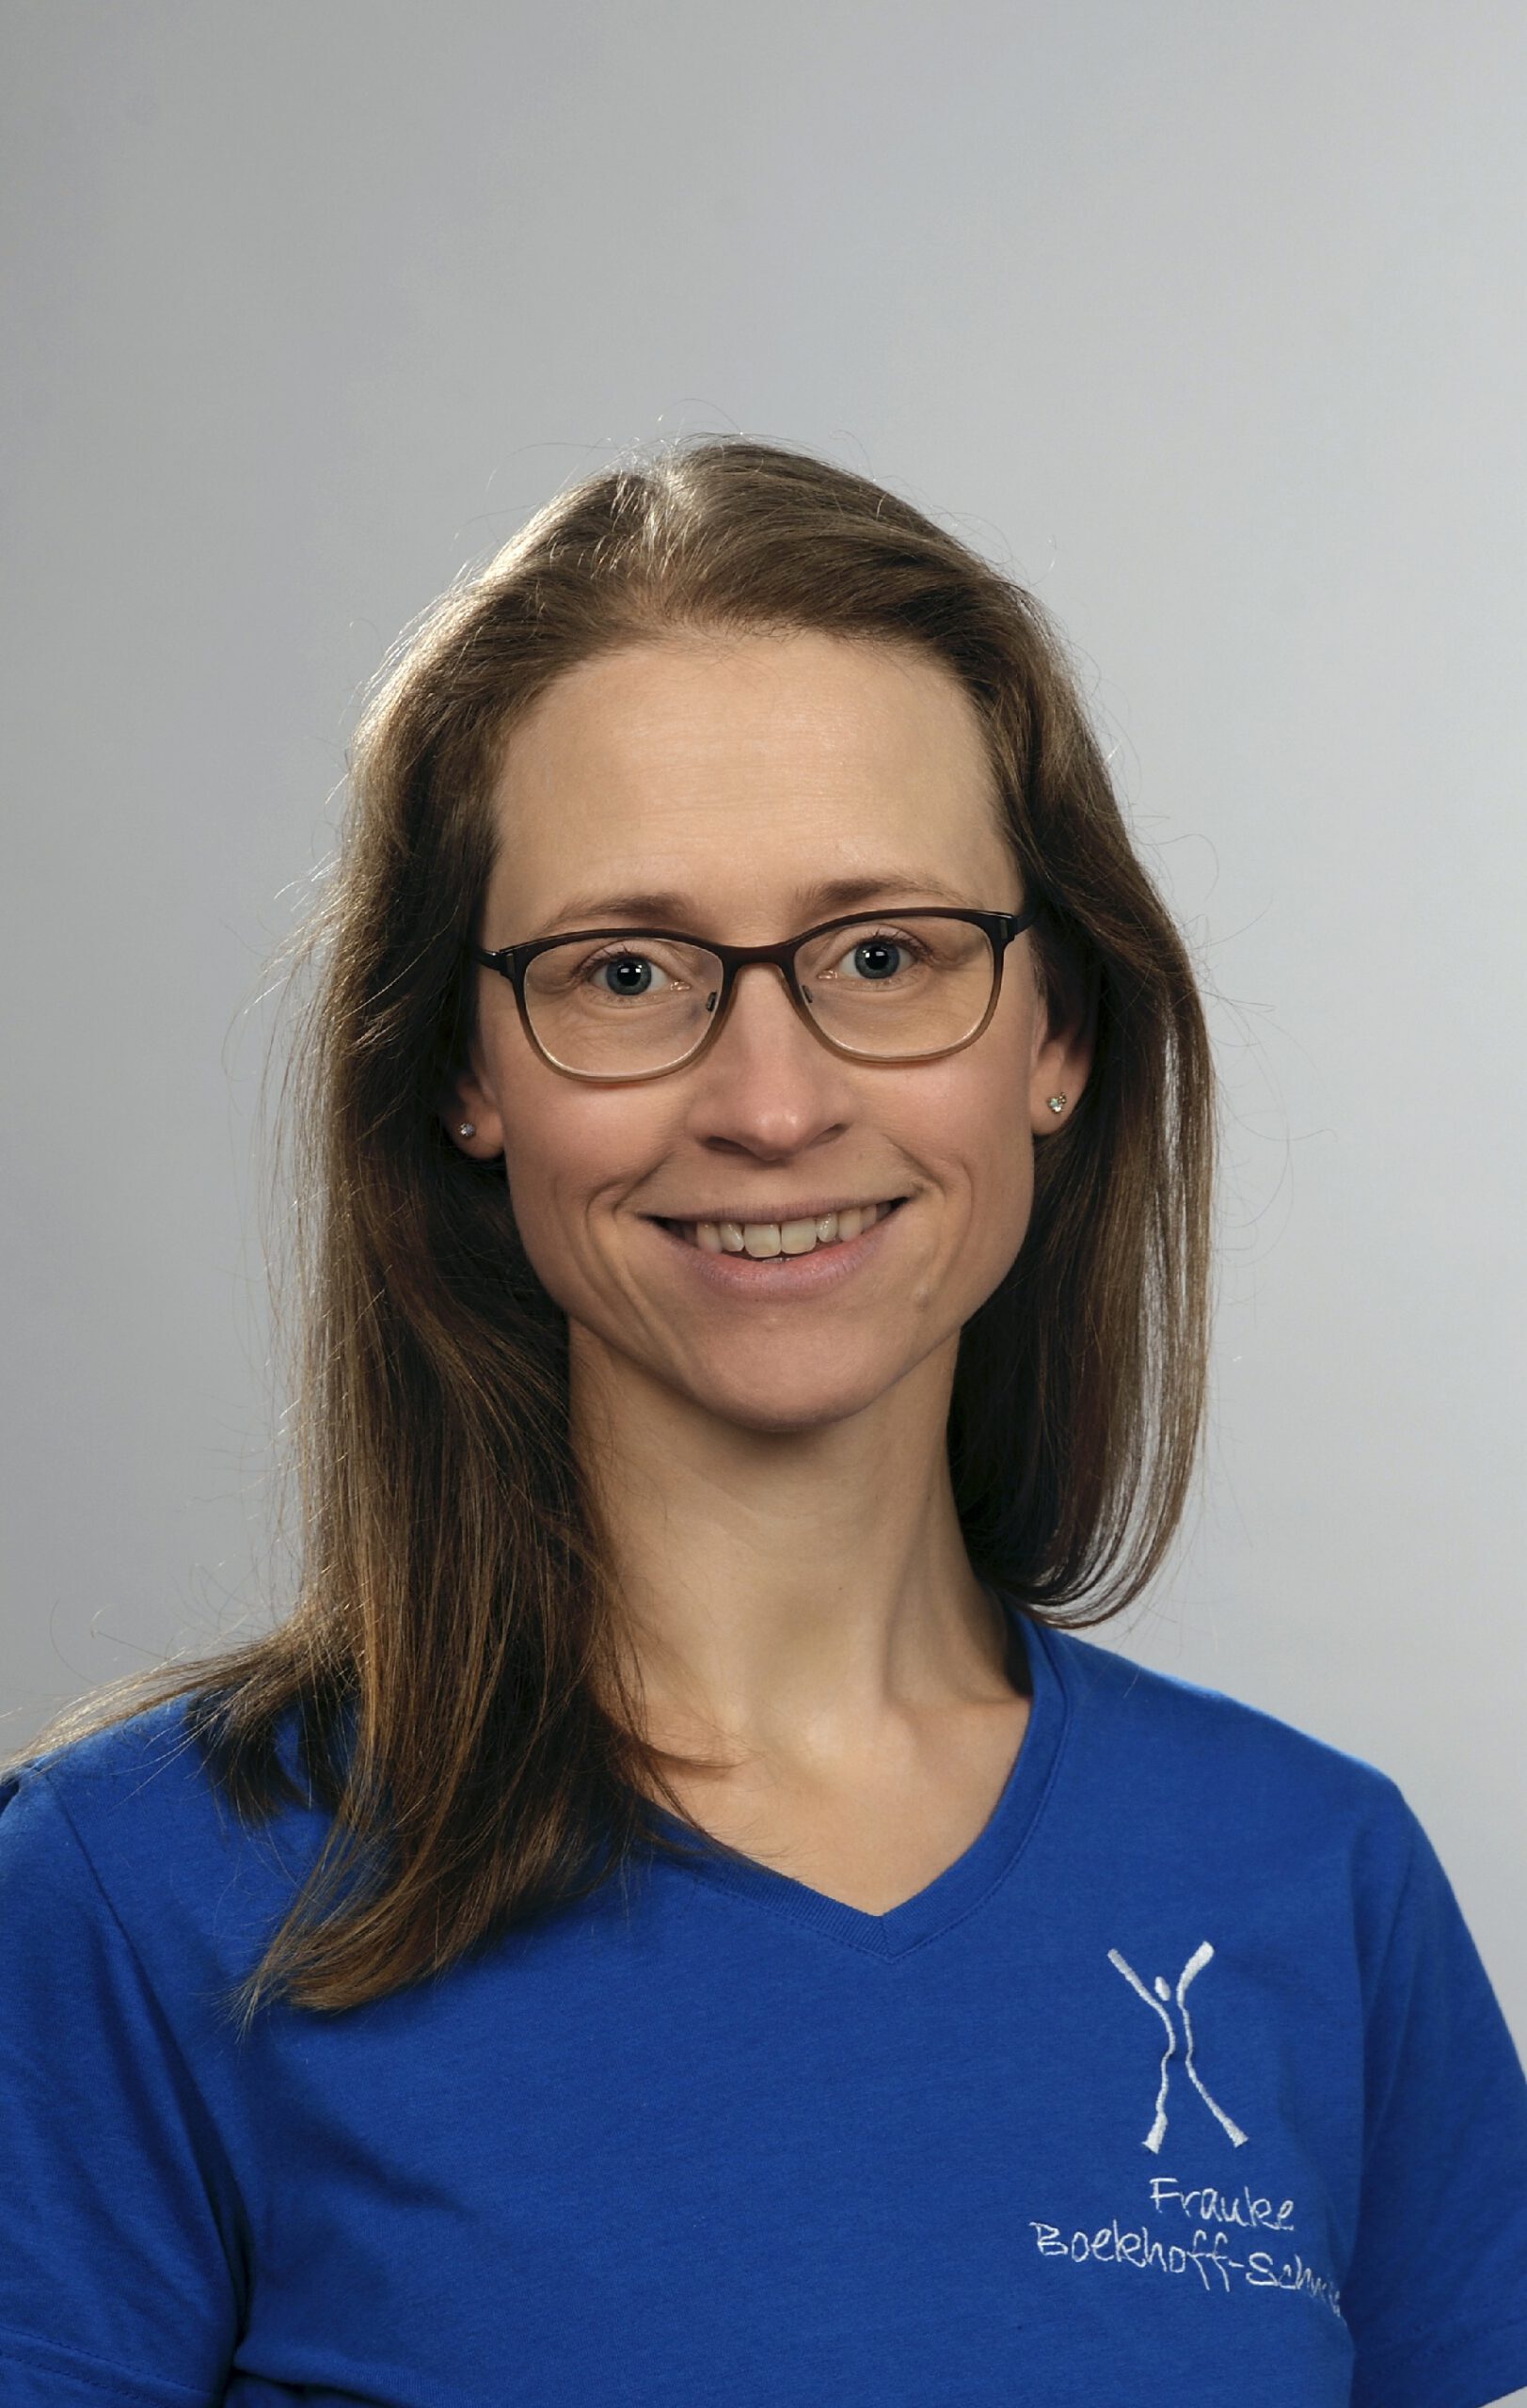 Frauke Boekhoff-Schmidt